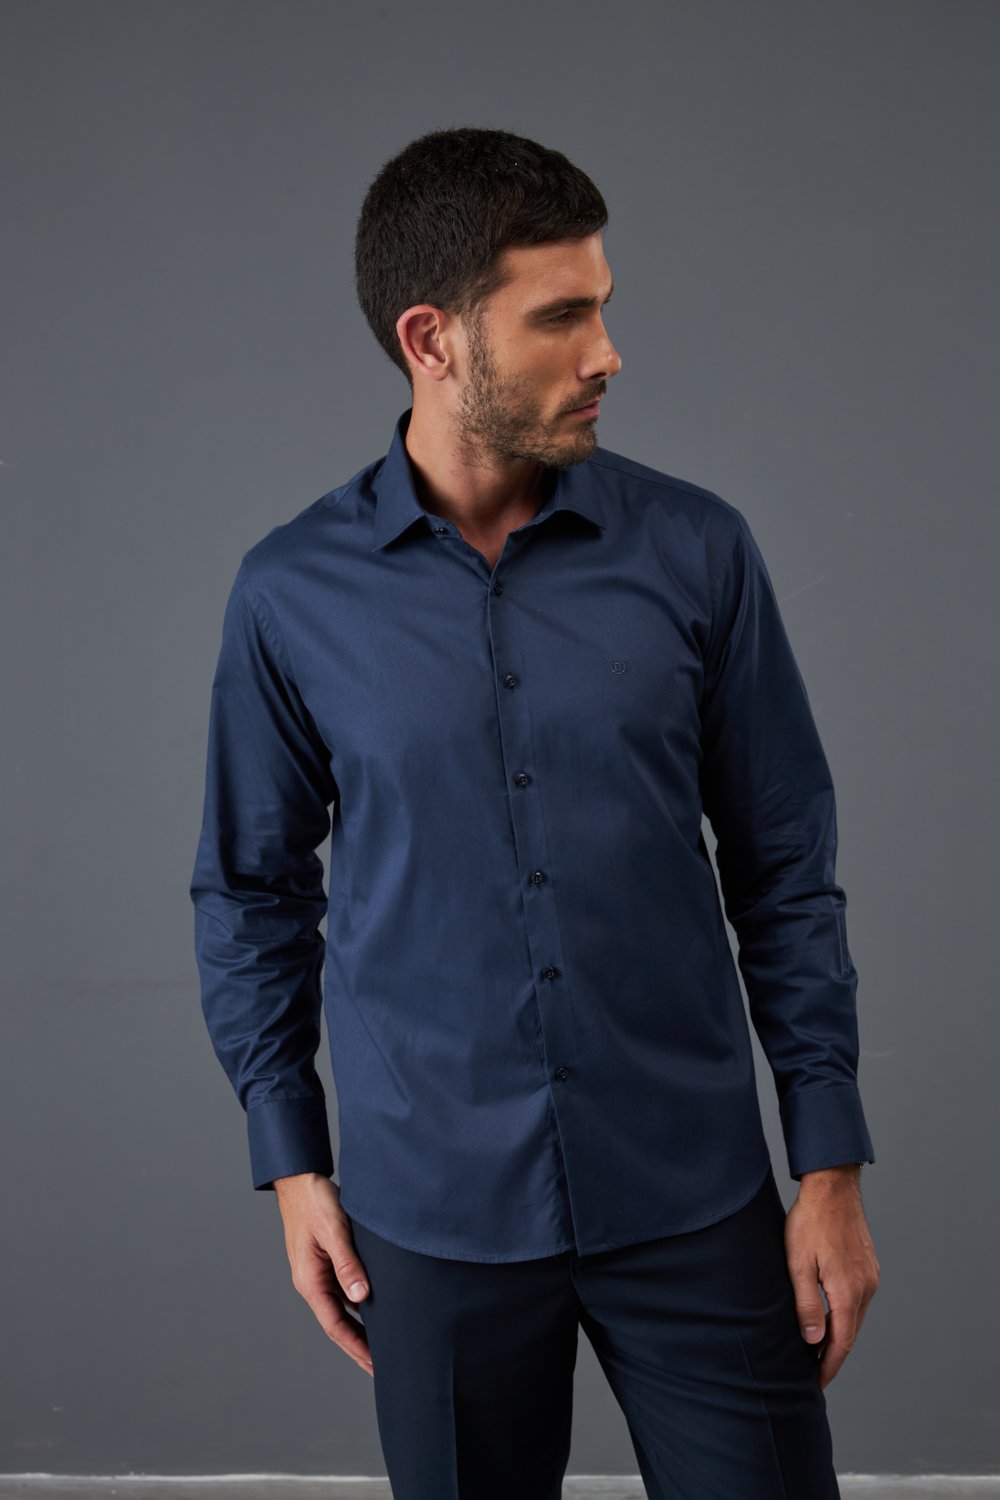 https://static.deluccaclassico.com.br/public/deluccaclassico/imagens/produtos/camisa-social-masculina-manga-comprida-azul-noite-642f228679321.jpg